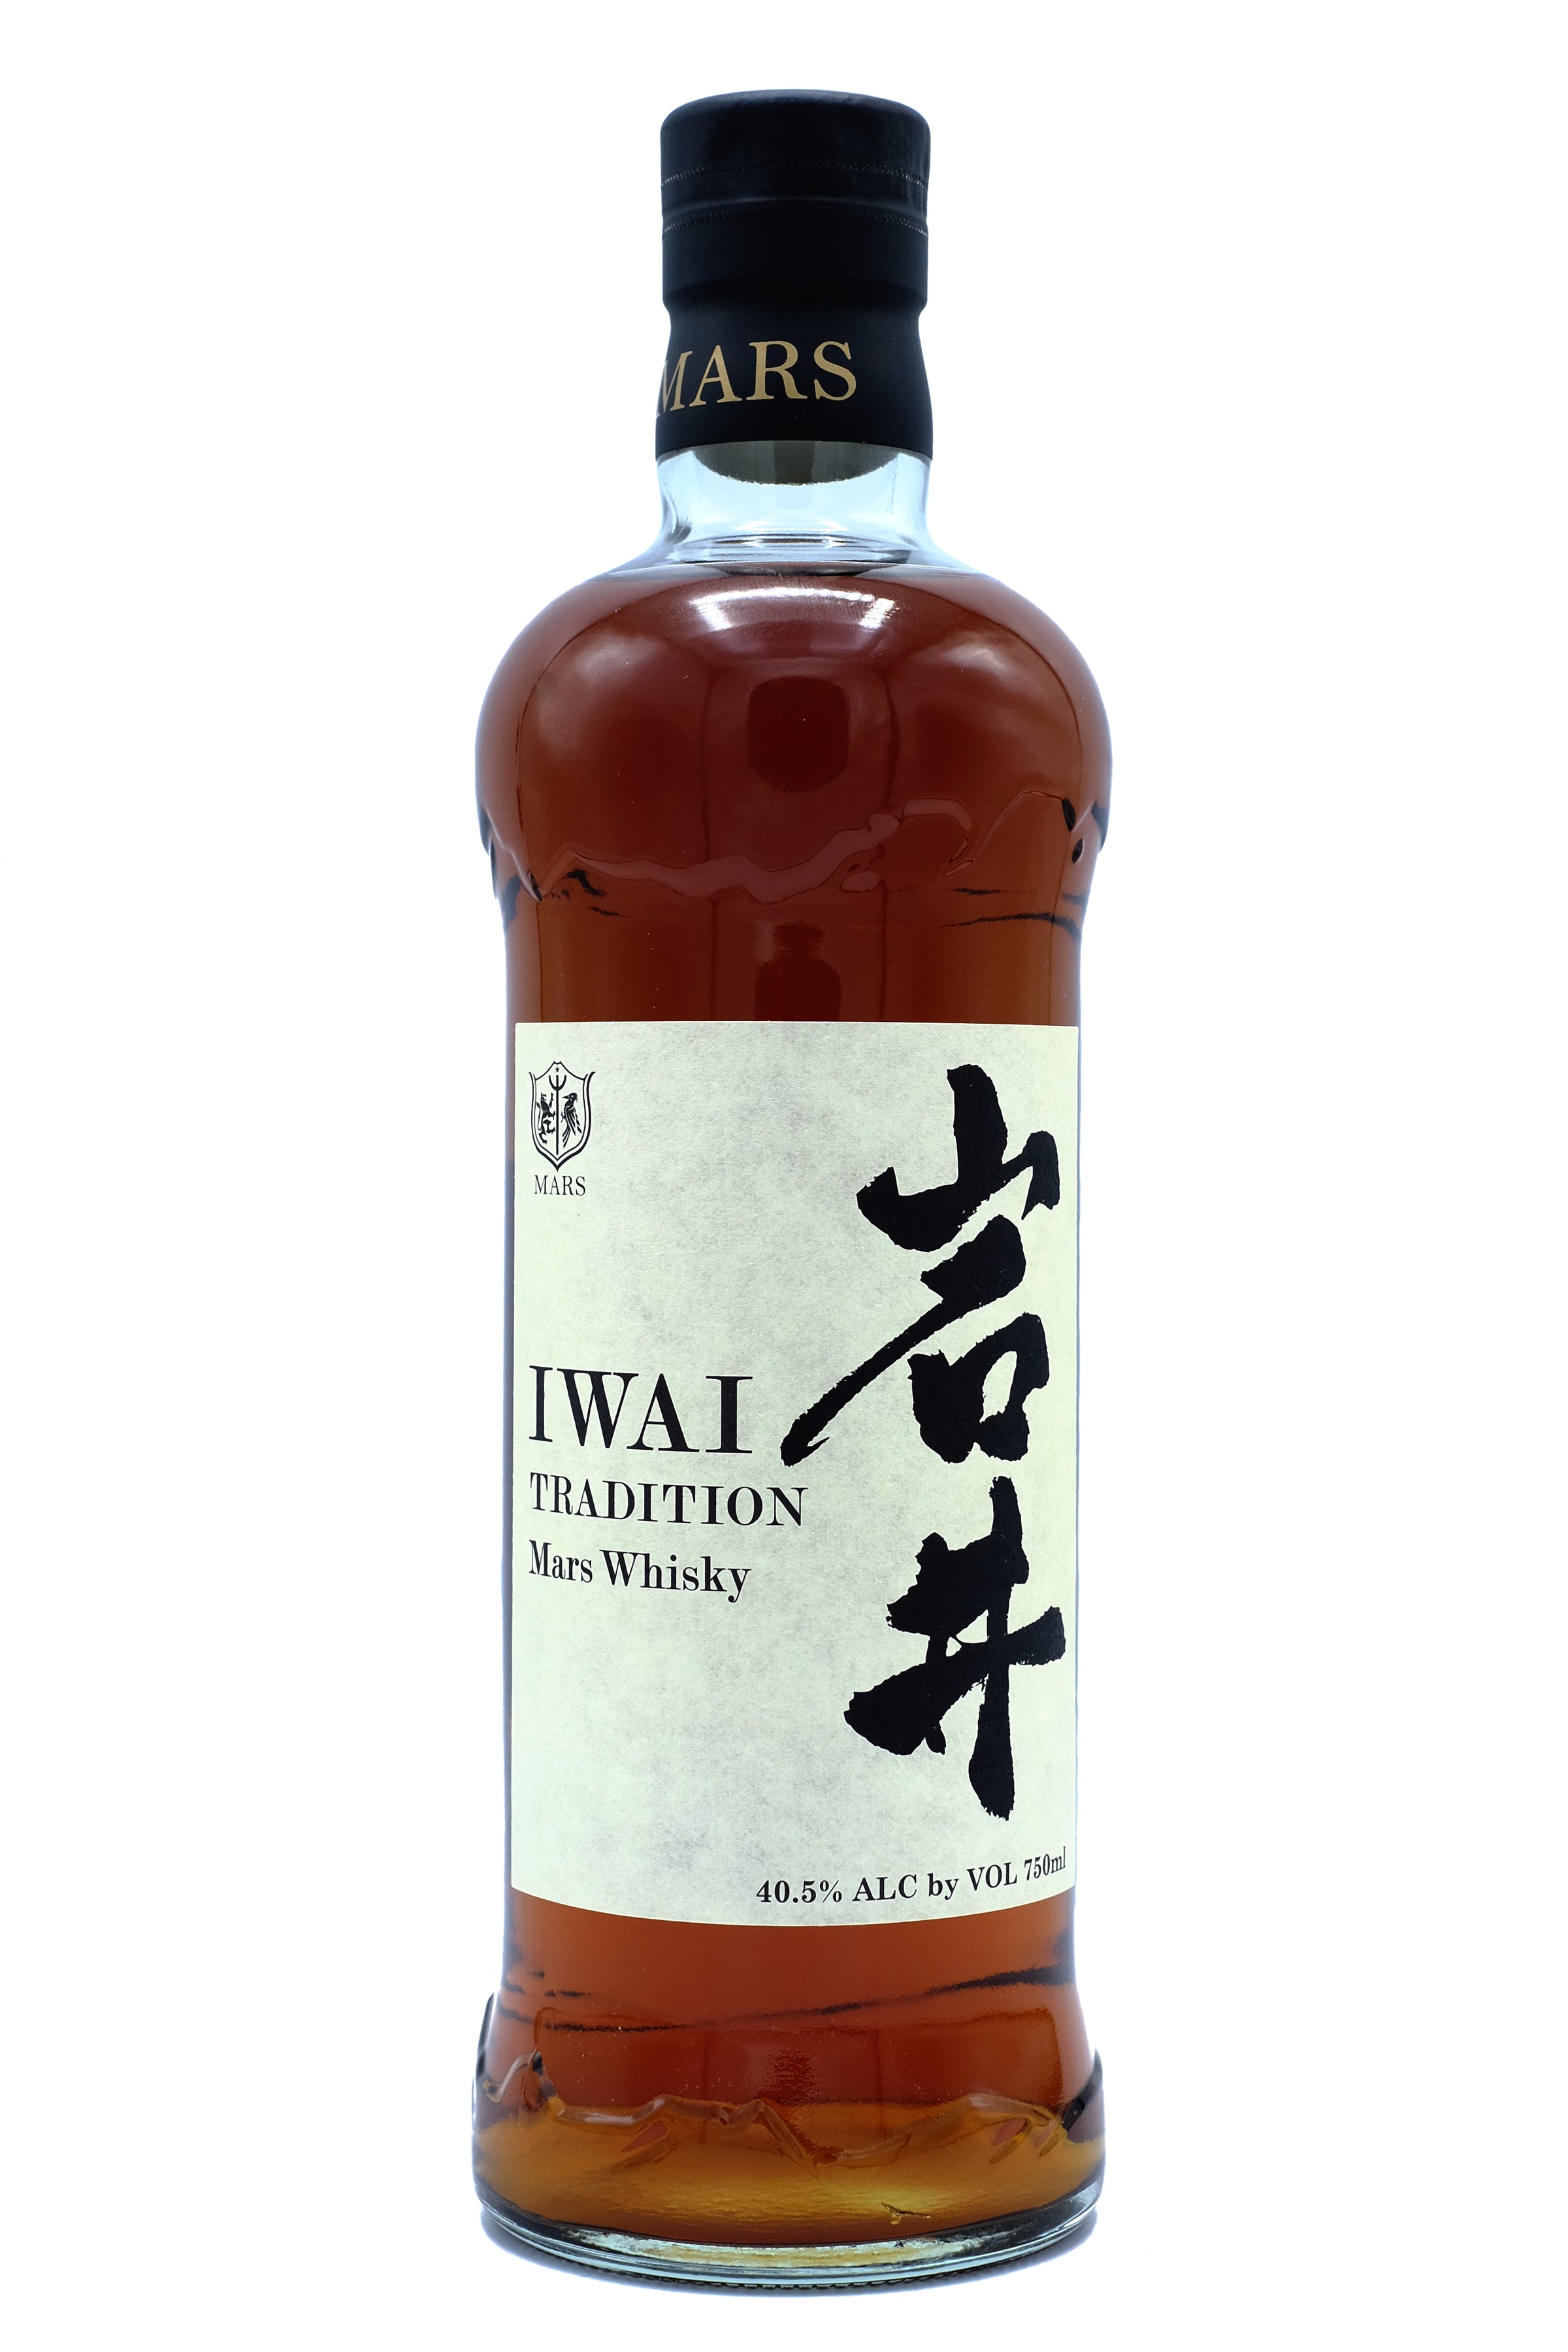 Mars Shinshu Iwai Tradition Whisky